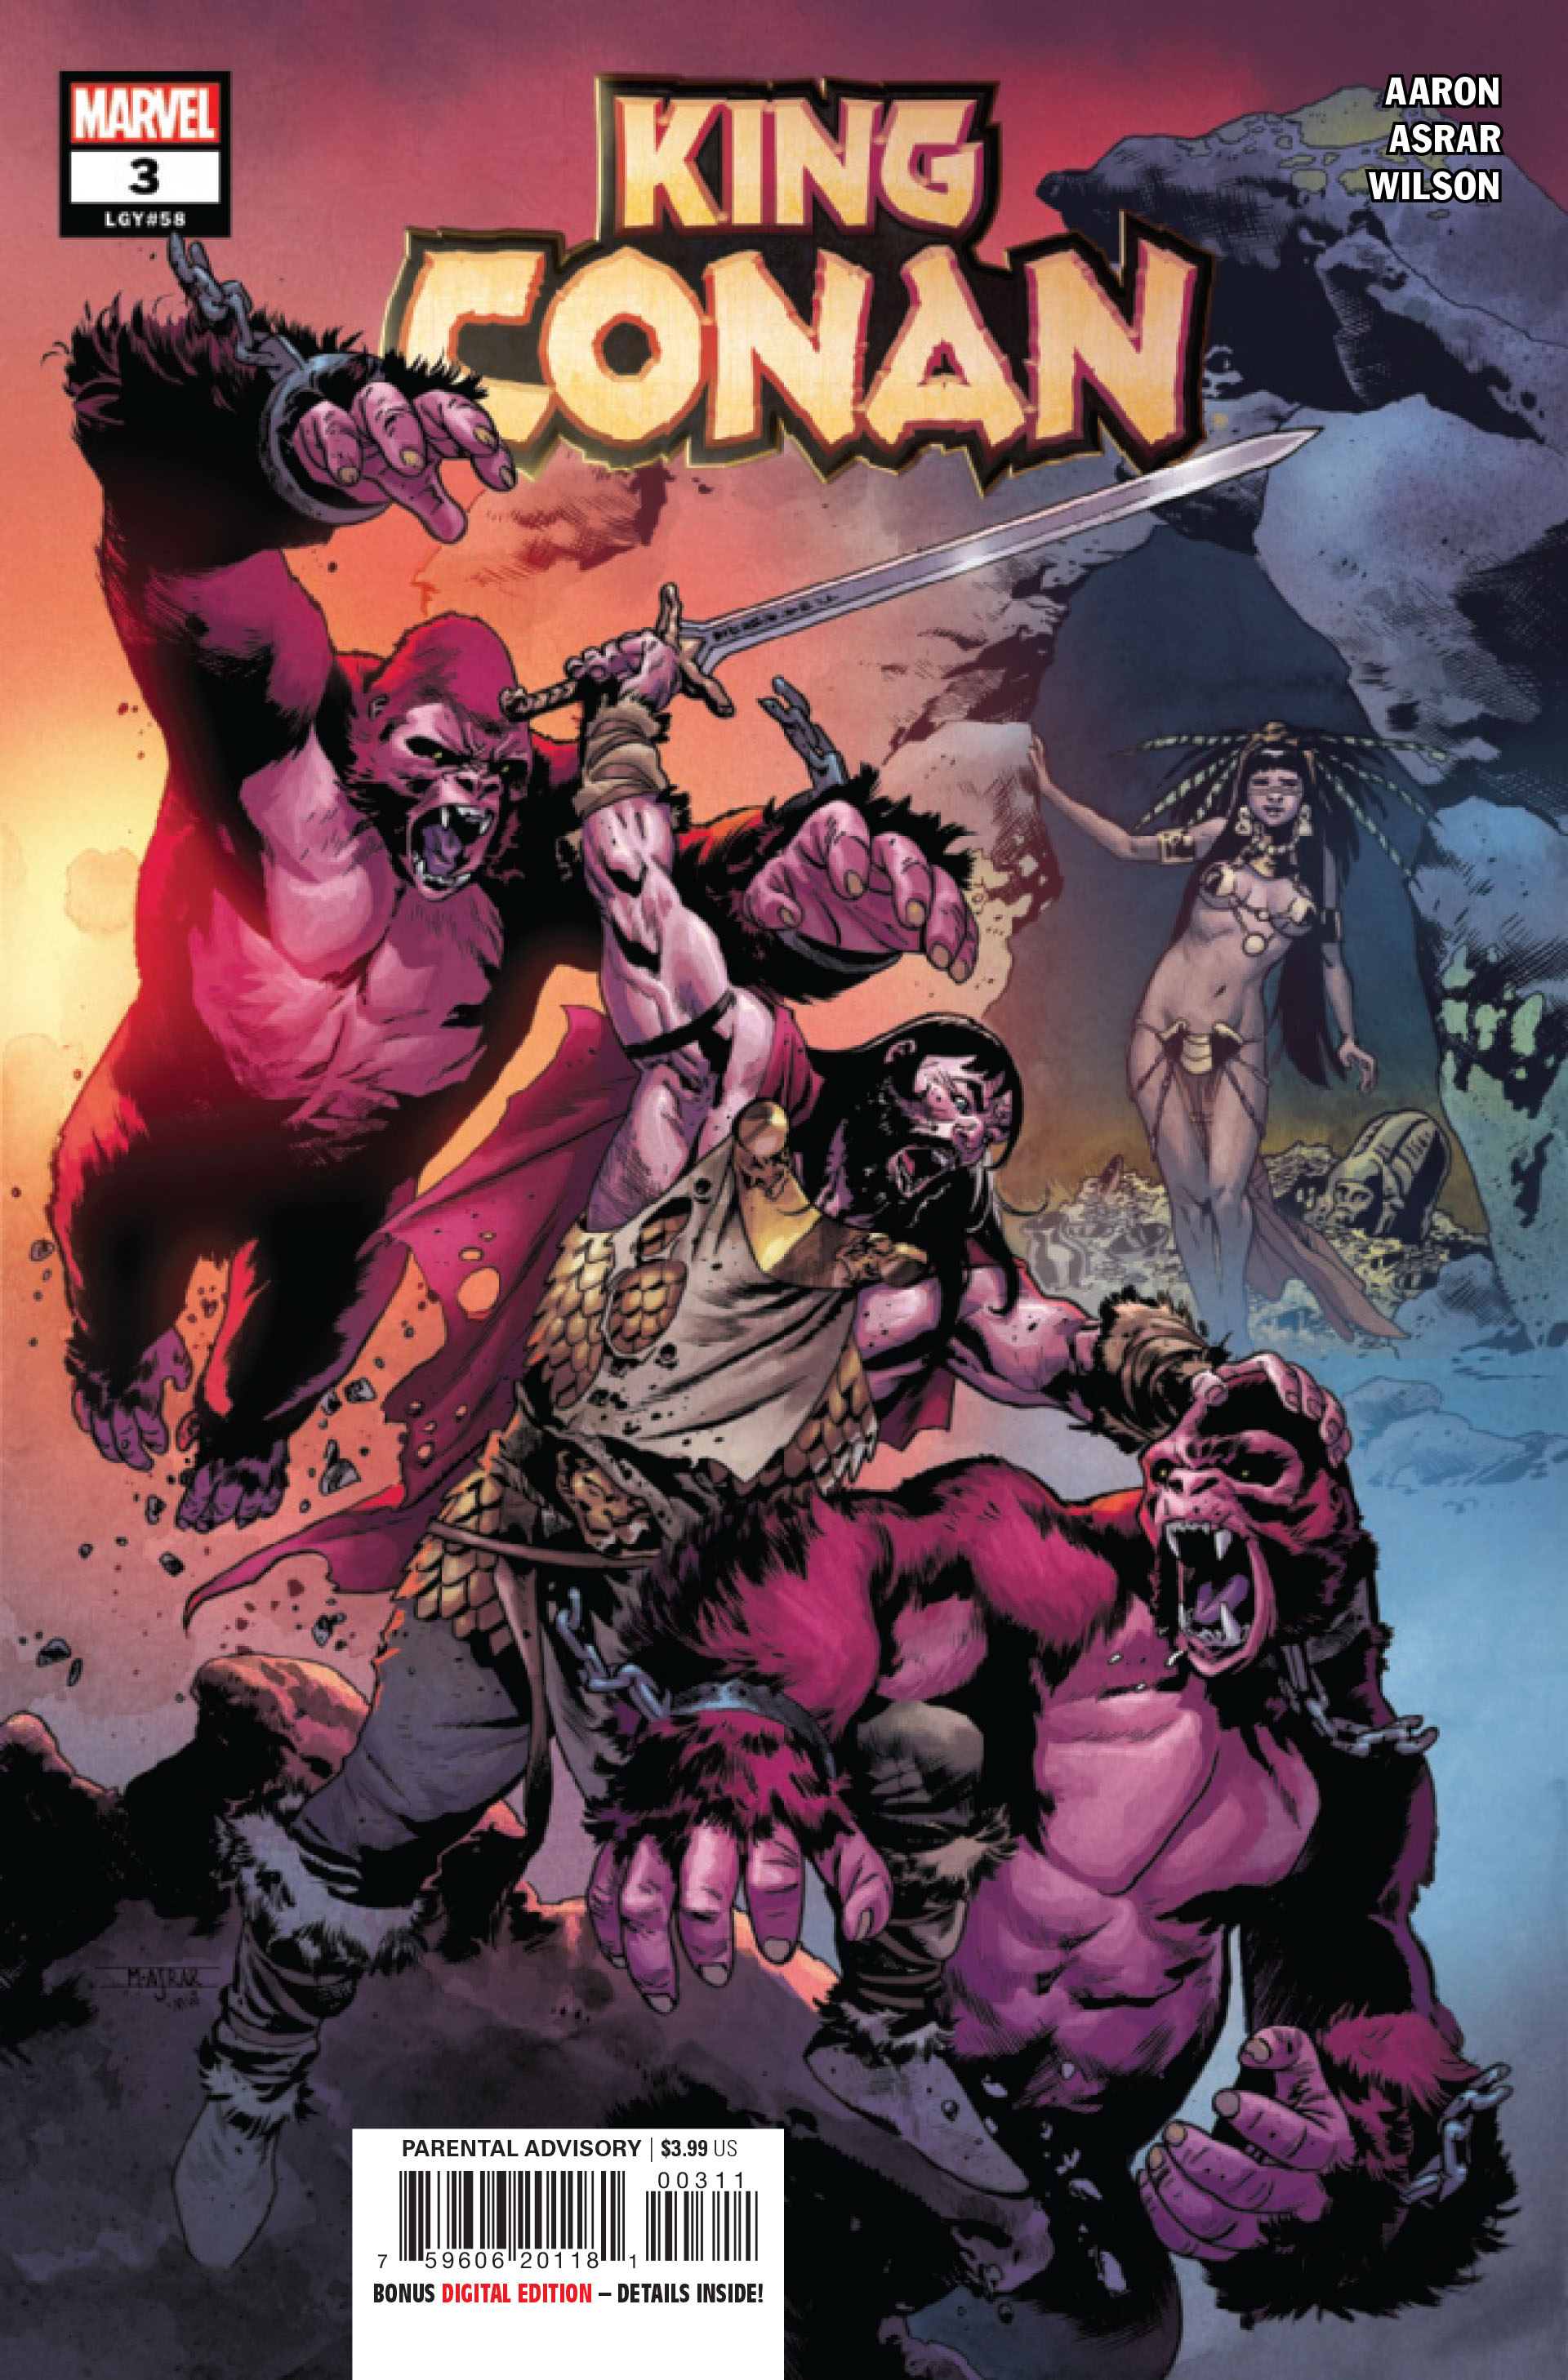 King Conan #3 main cover